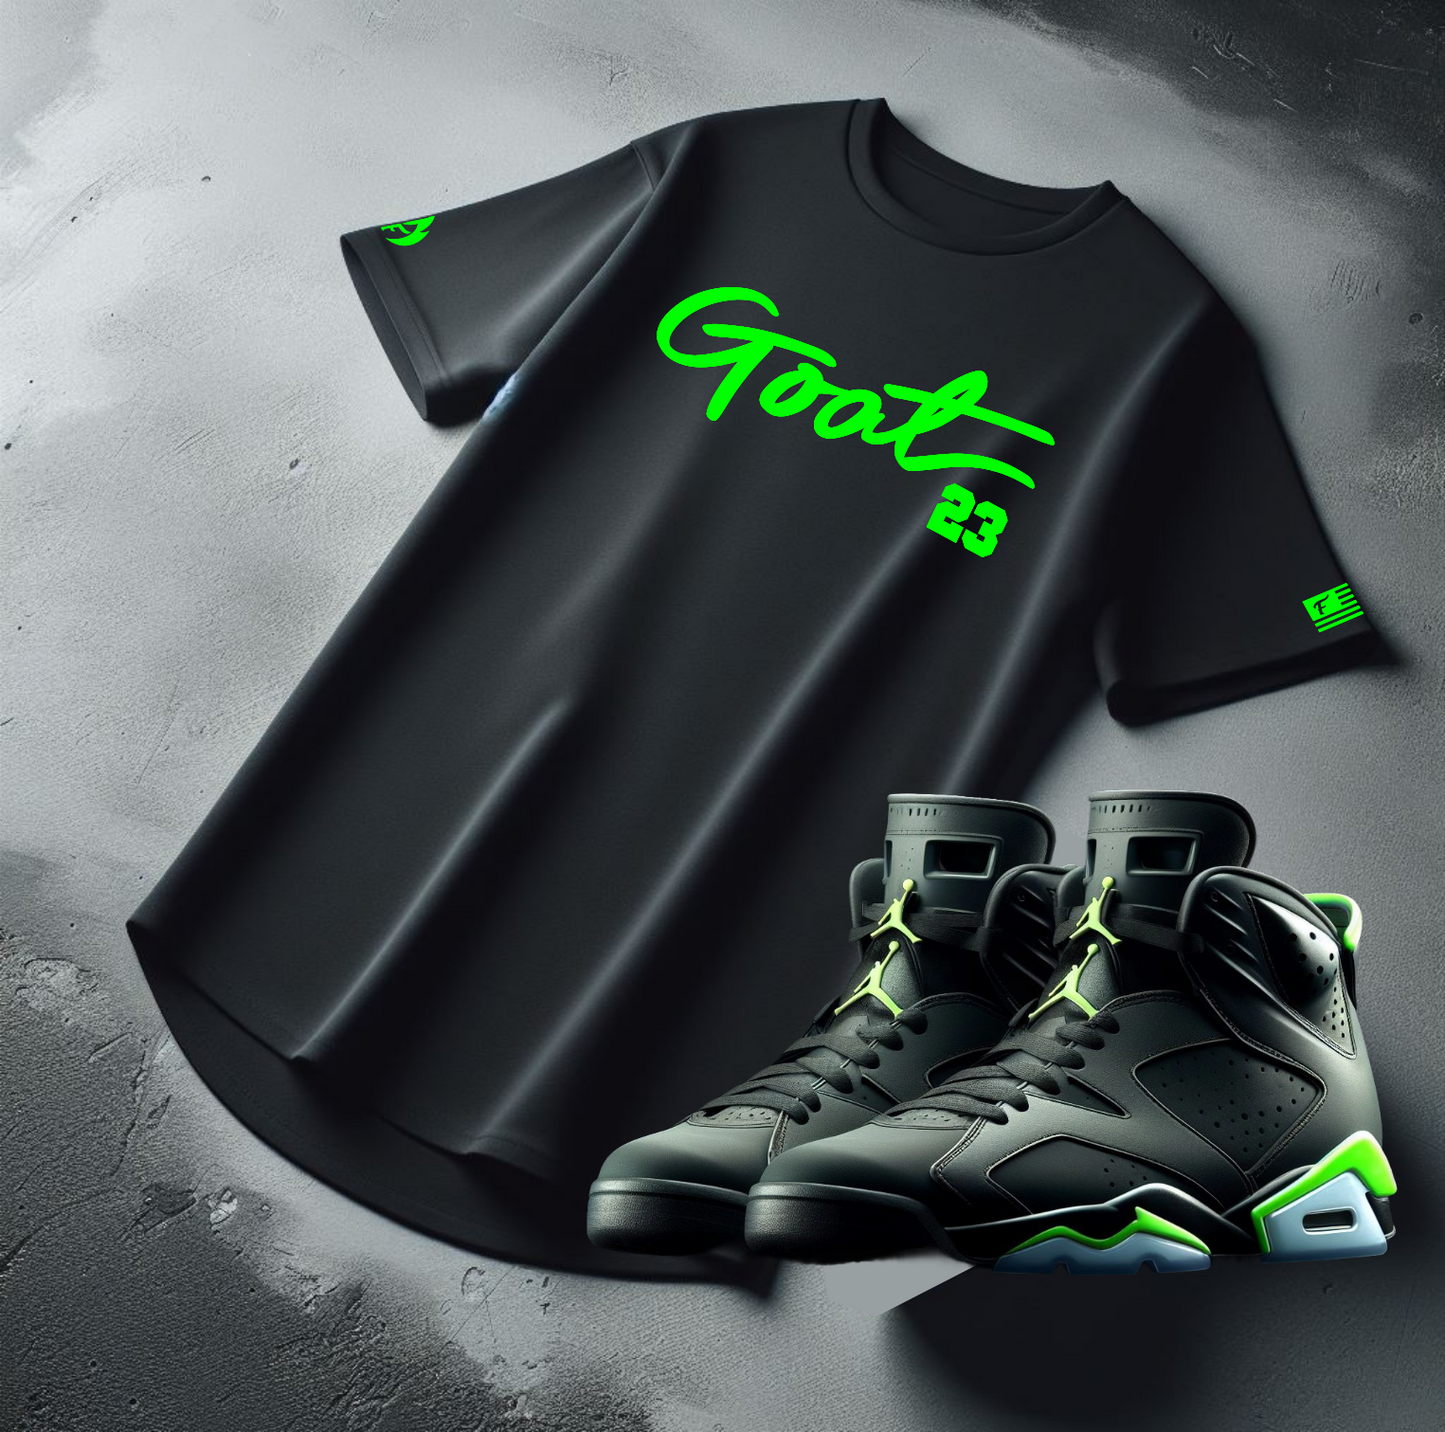 Men's GOAT #23 Black Sneaker T-Shirt To Match Air Jordan Retro 6 Electric Green  🔥 Men's Sneakerhead Tees